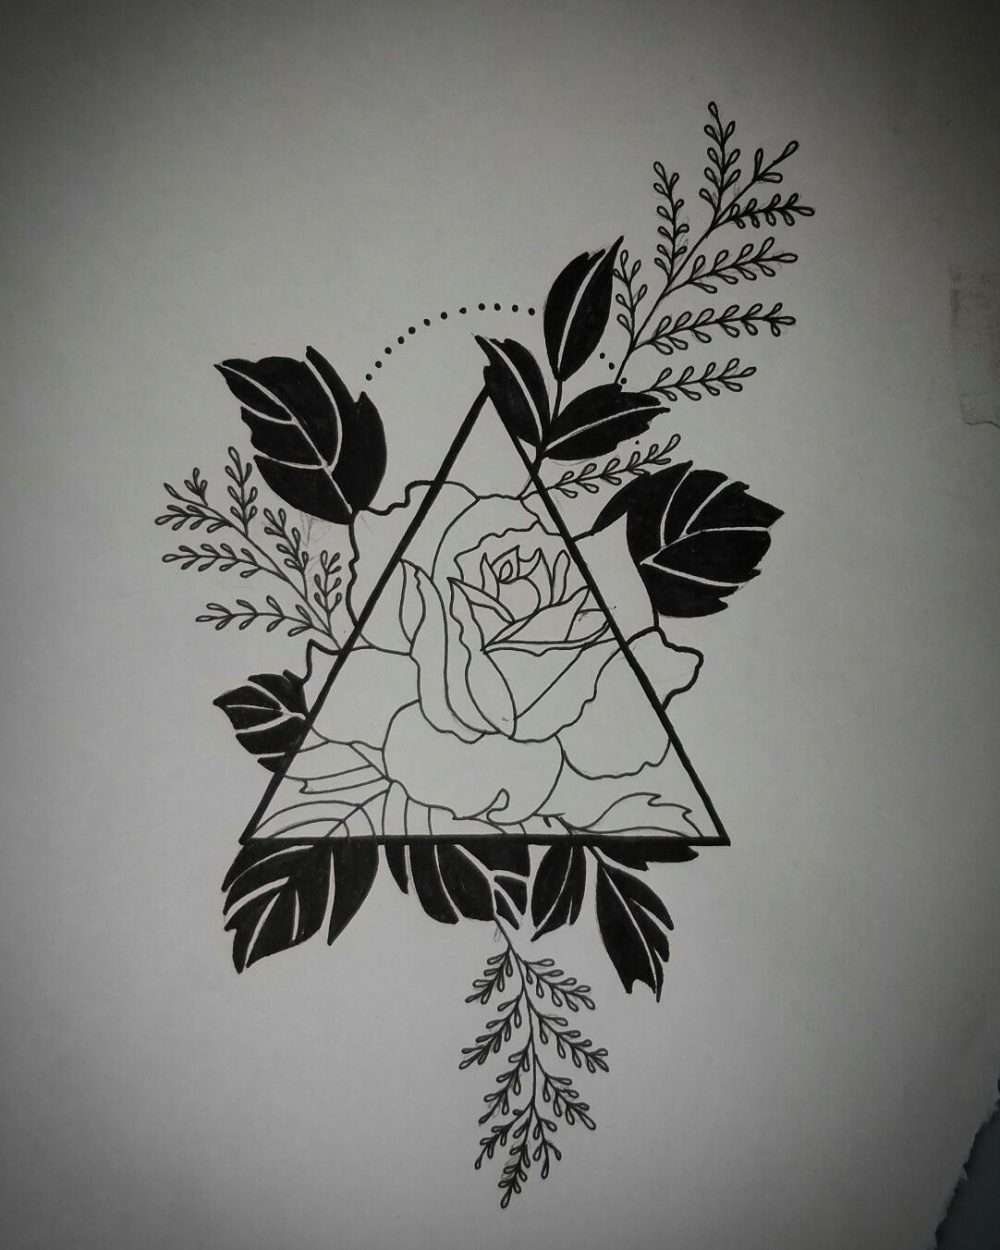 Dibujos de tatuajes: rosa y triángulo